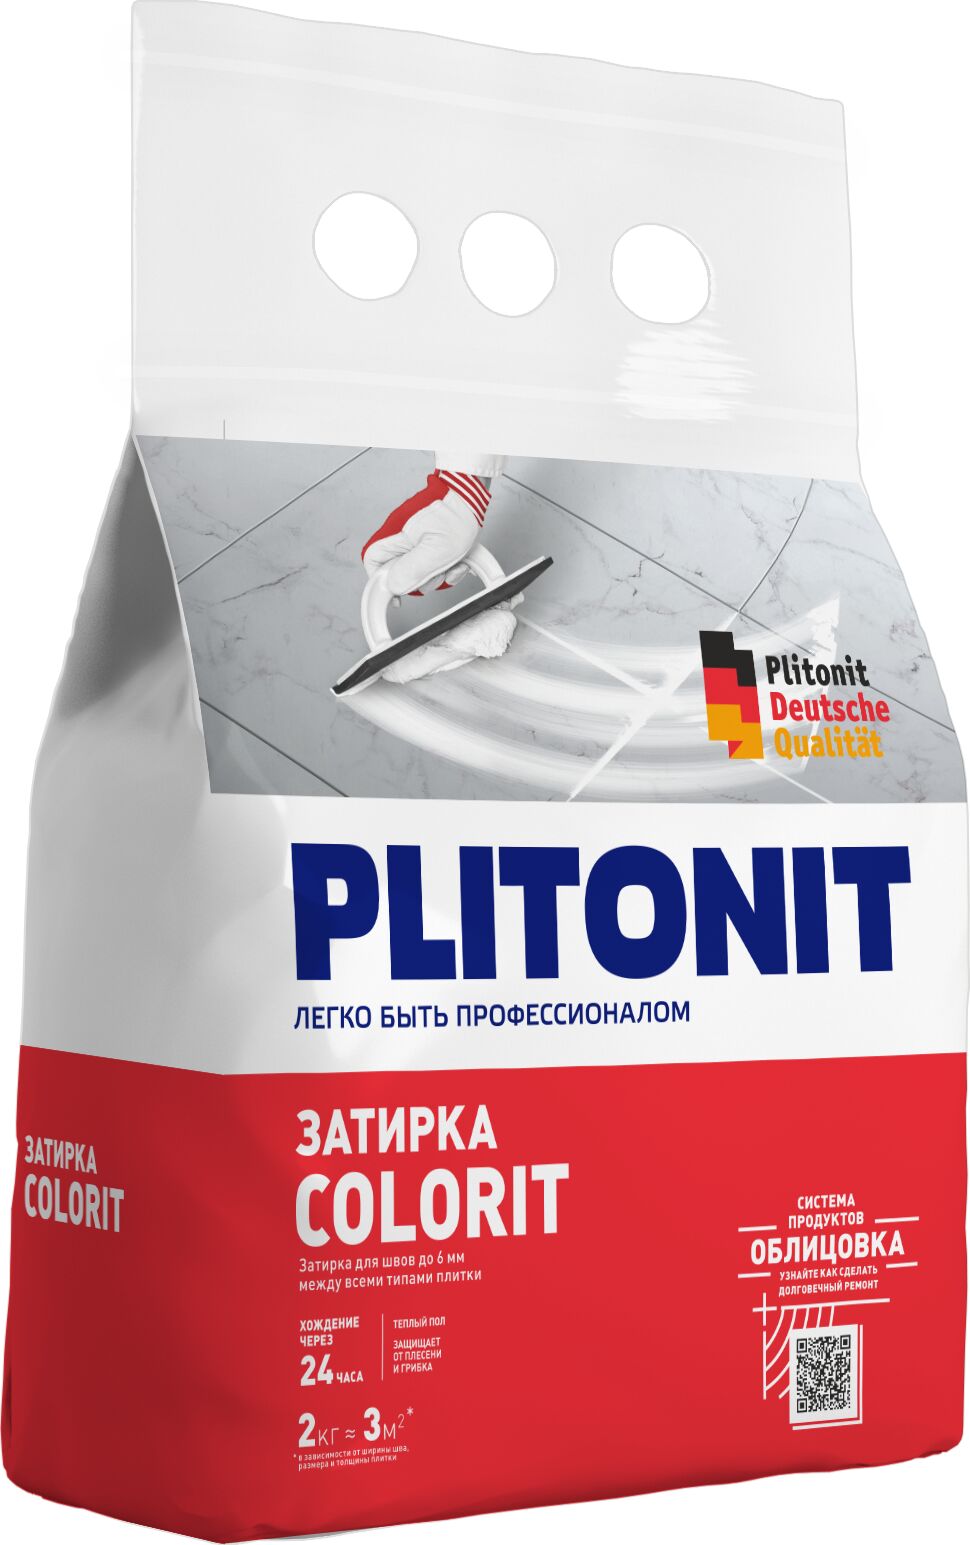 PLITONIT Colorit затирка между всеми типами плитки (1,5-6 мм) БЕЛАЯ -2 , PLITONIT Colorit затирка между всеми типами плитки (1,5-6 мм) БЕЛАЯ -2 